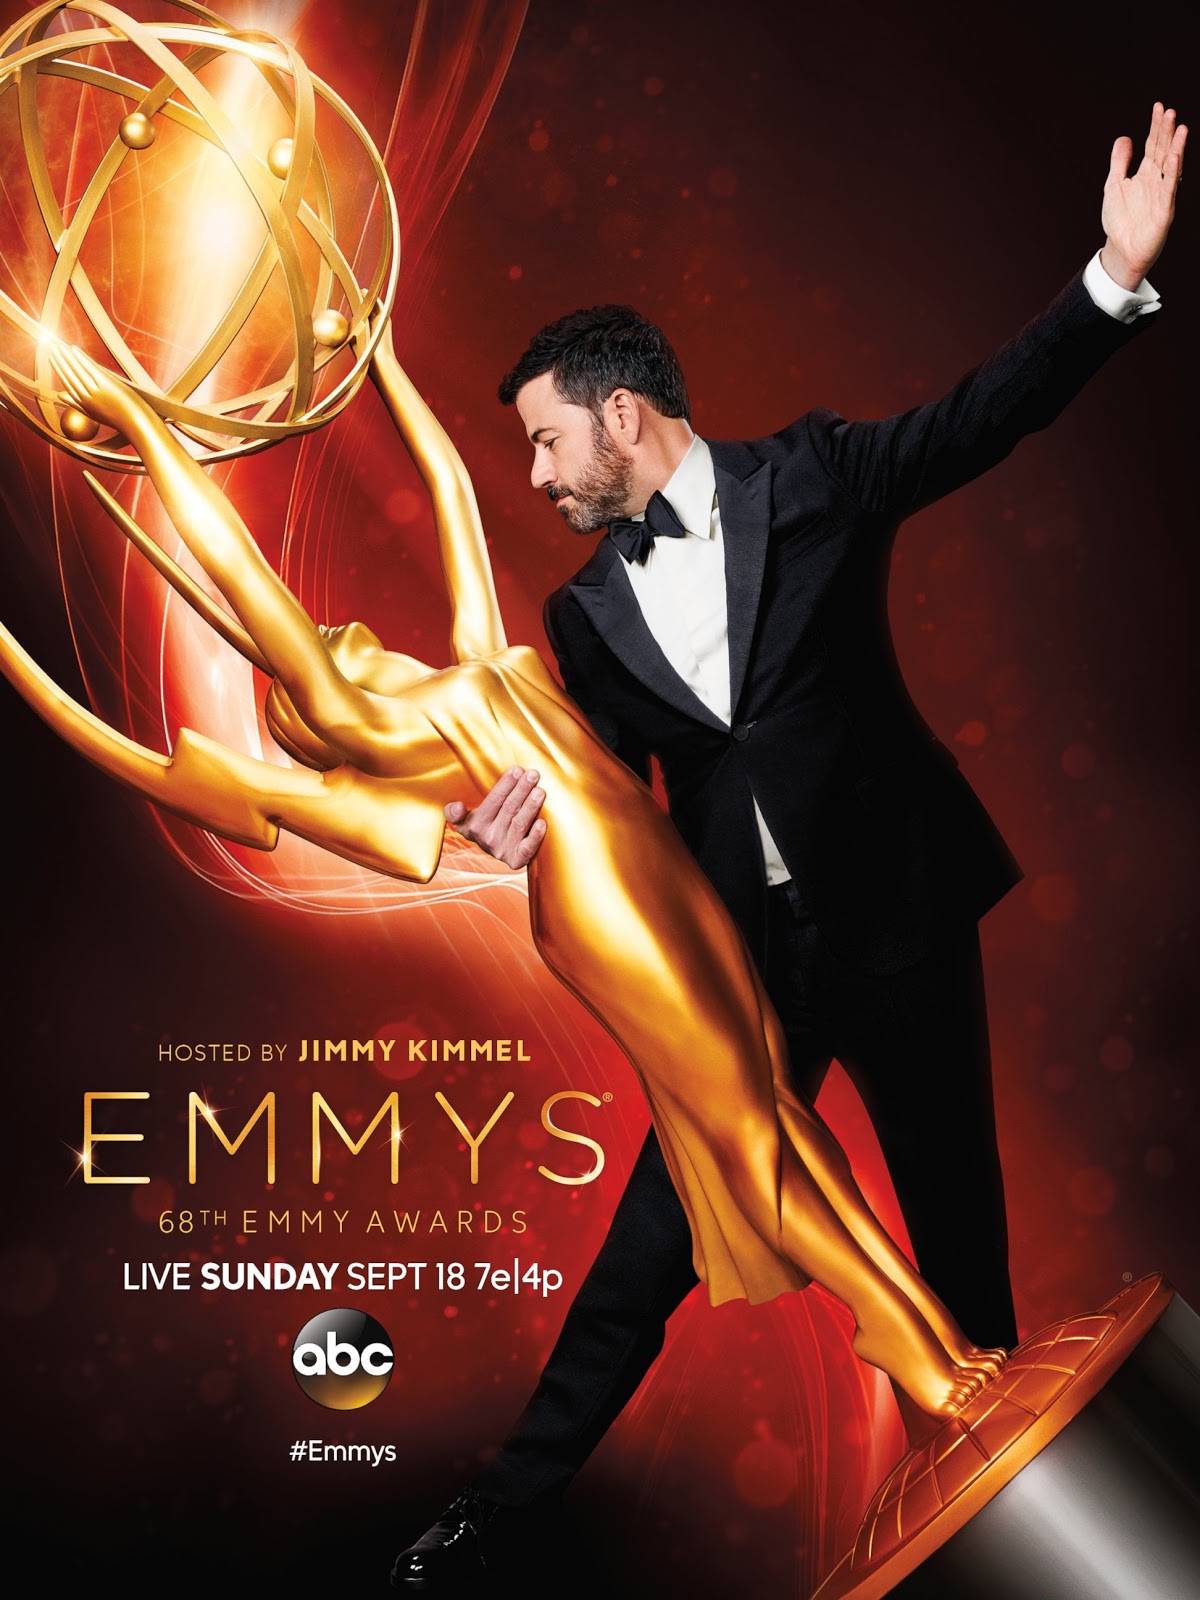 Emmys Awards 2016